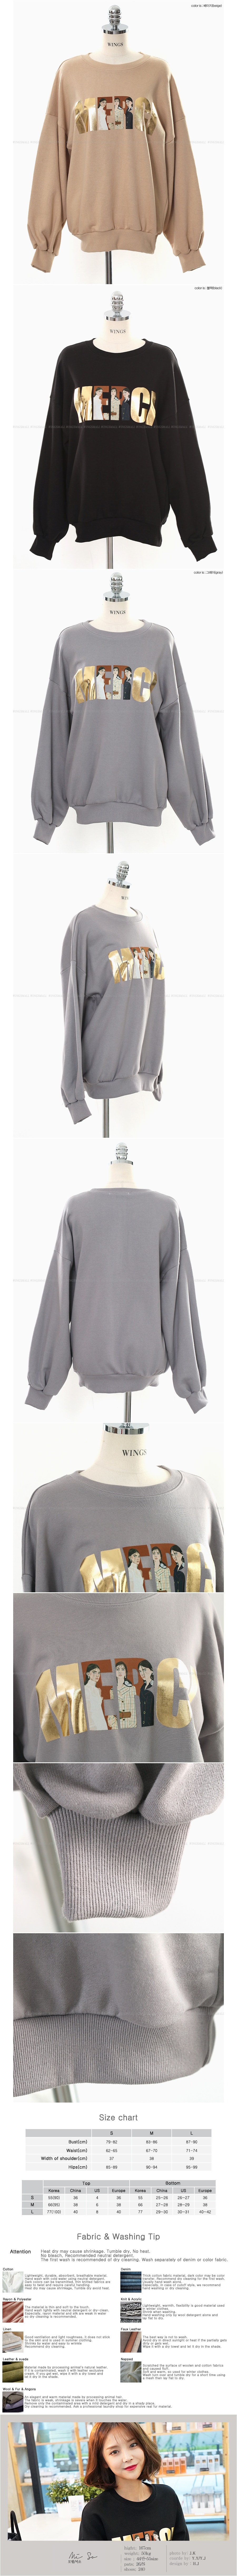 WINGS Puff Sleeve Sweatshirt #Grey One Size(S-M)